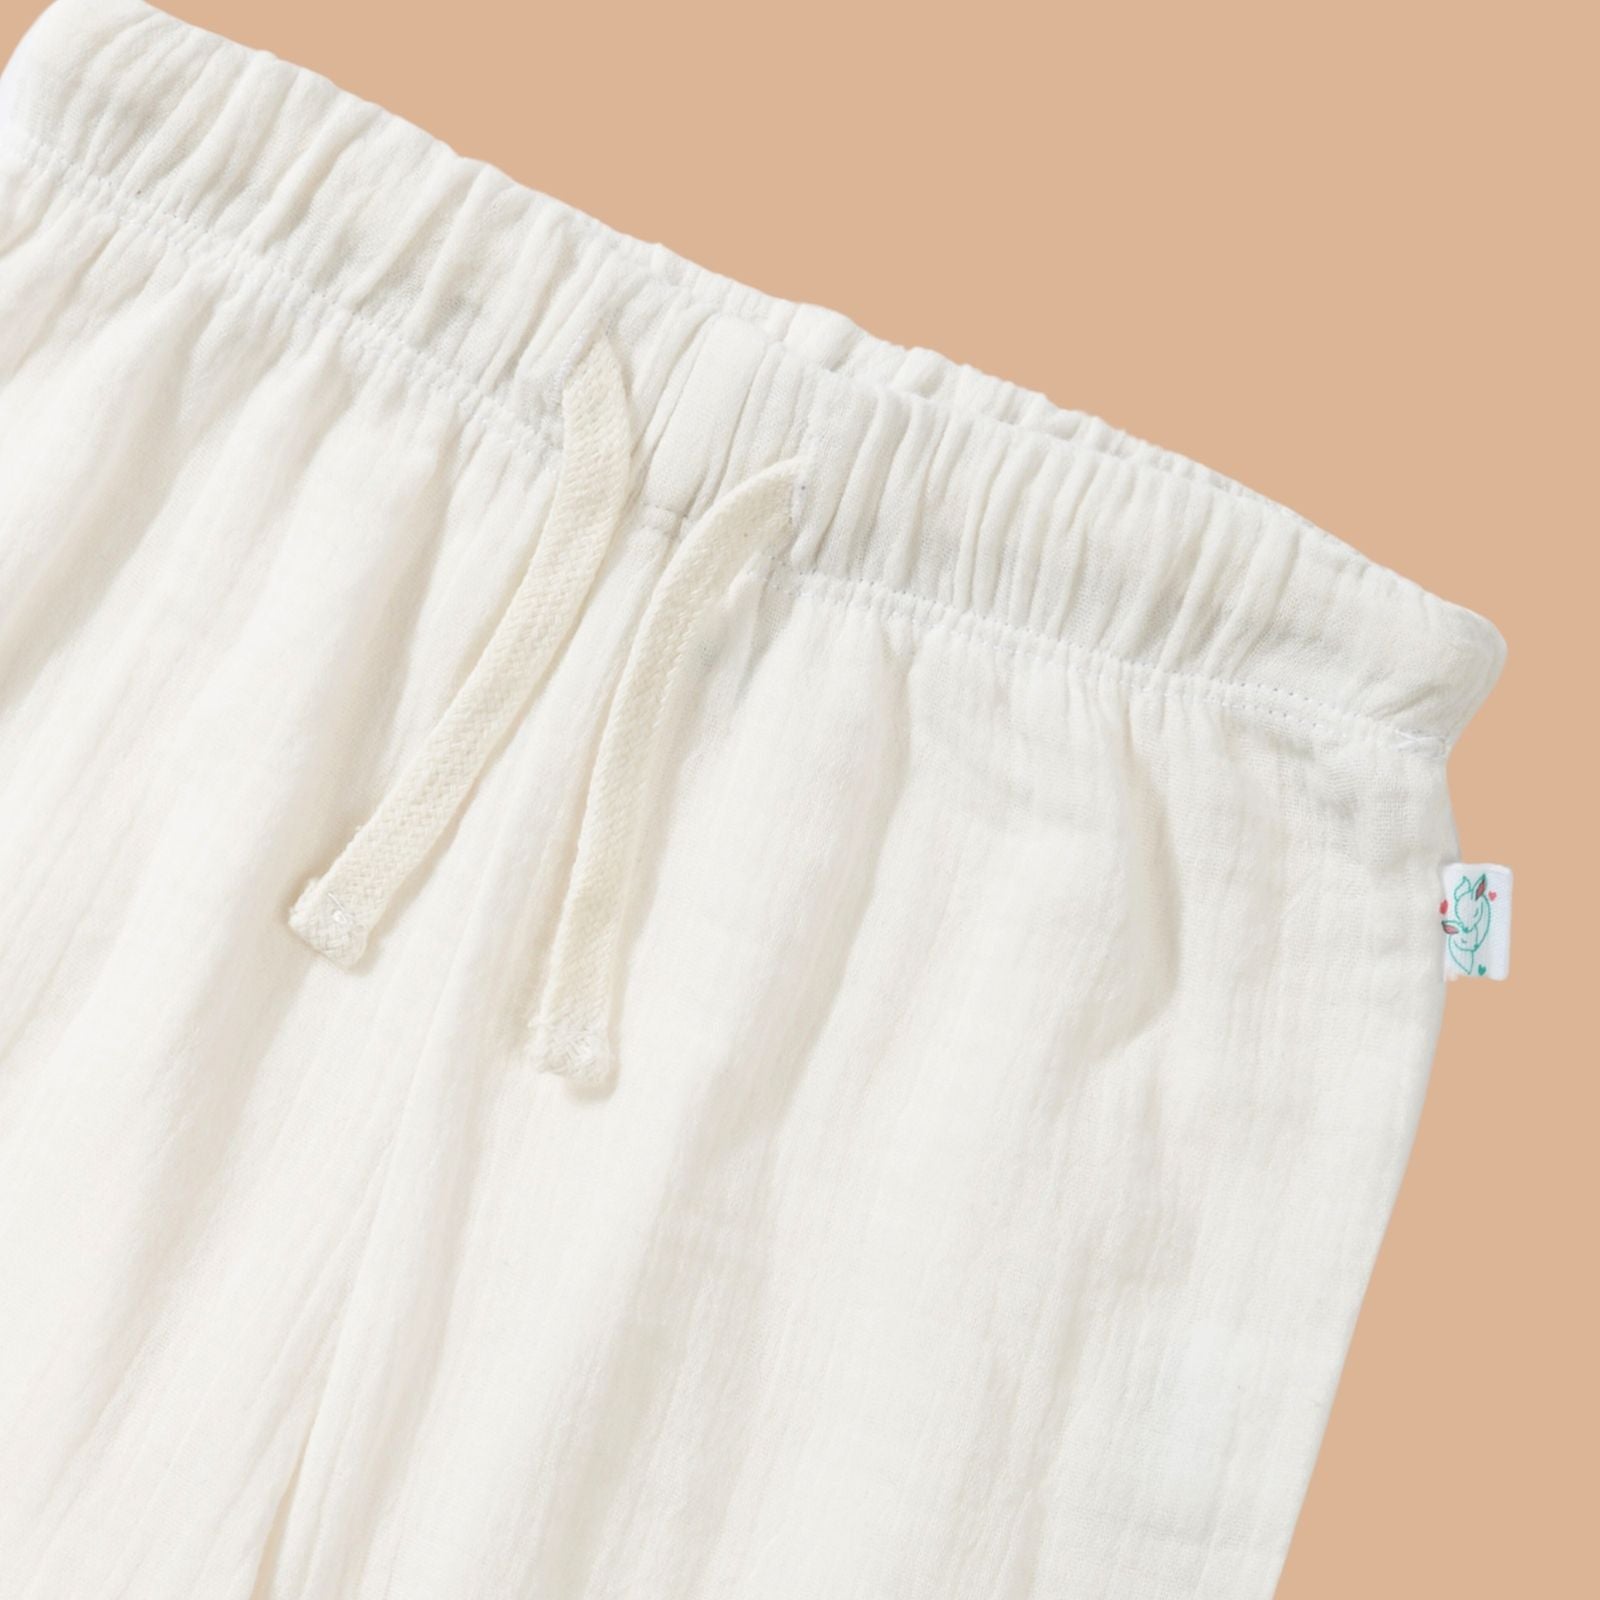 Greendeer White Kurta Shirt Cotton Cord Set